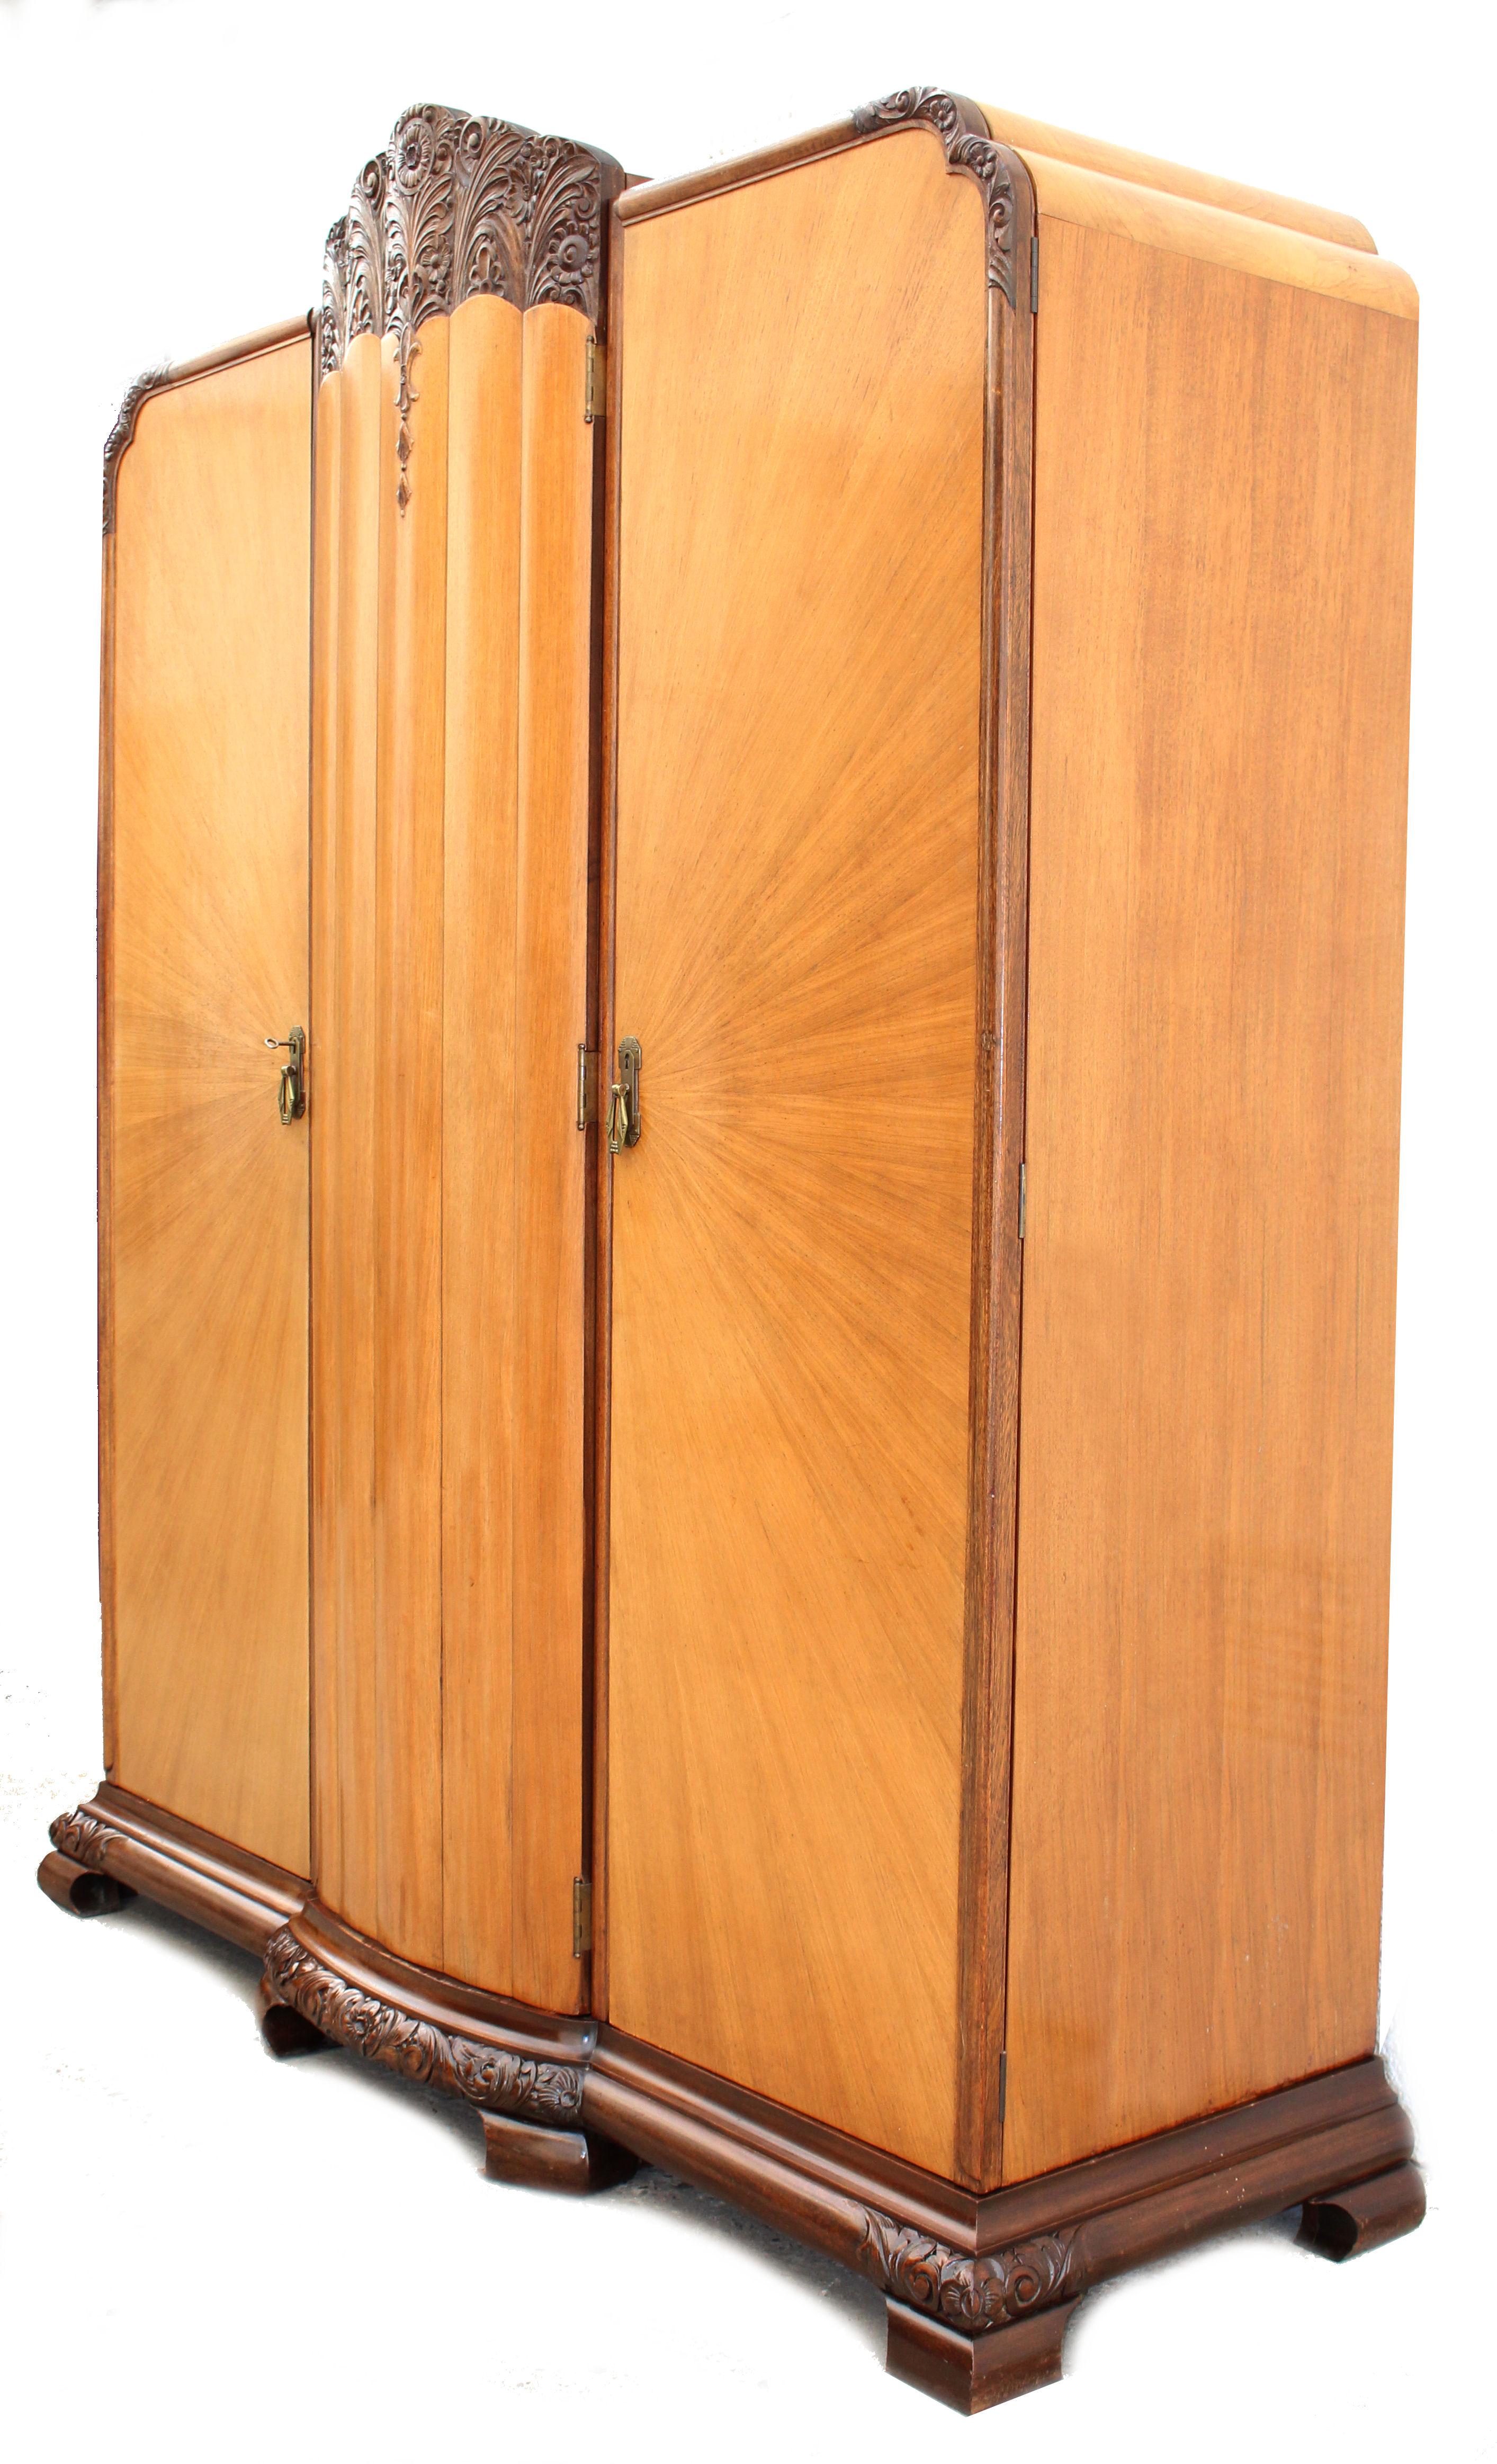 Walnut Art Deco 'Sunray' Triple Door Wardrobe, c1930, by Maple & Co, England